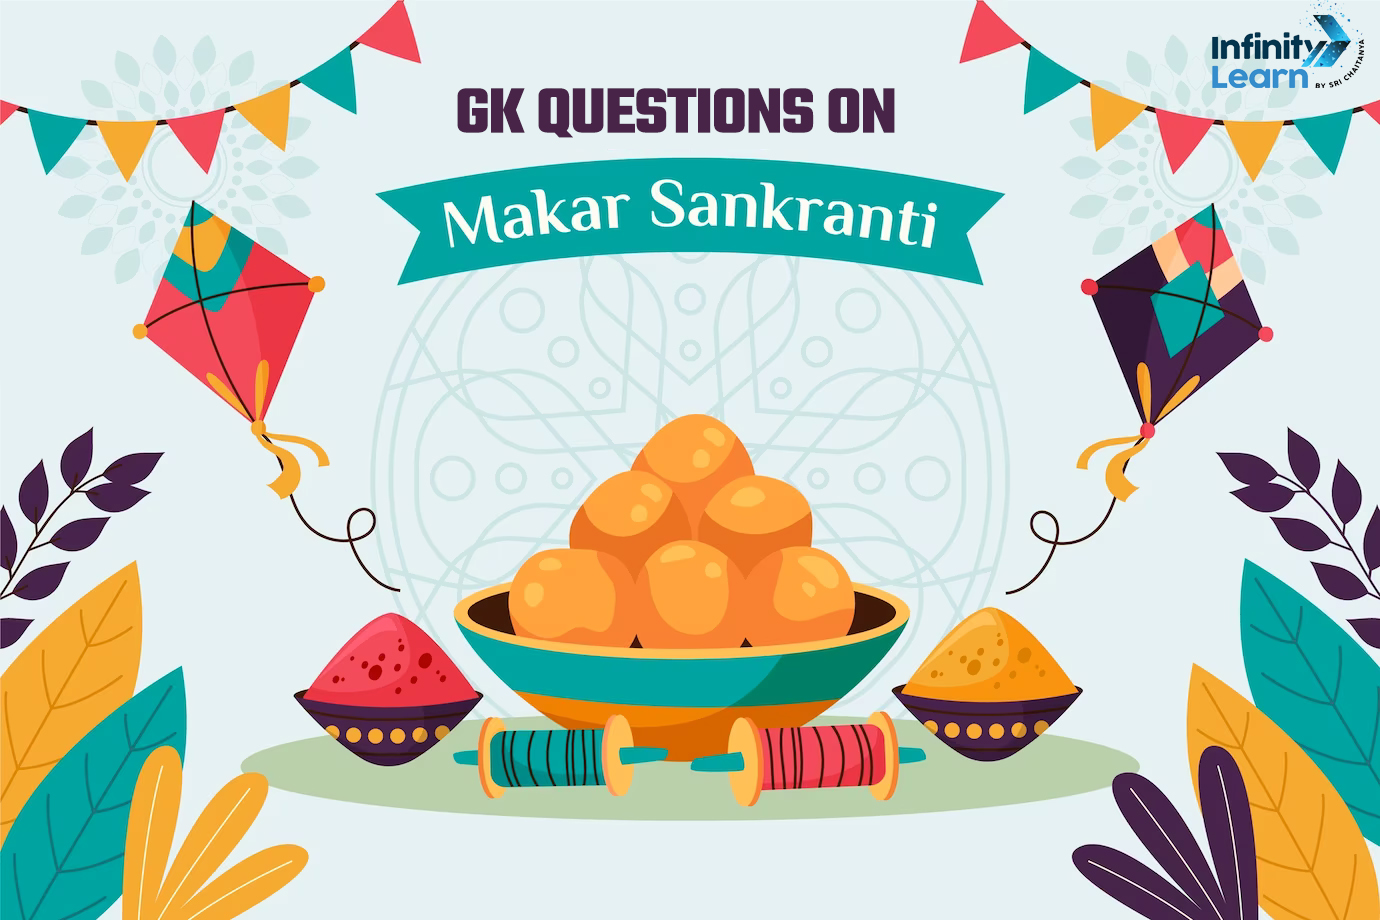 GK Questions on Makar Sankranti